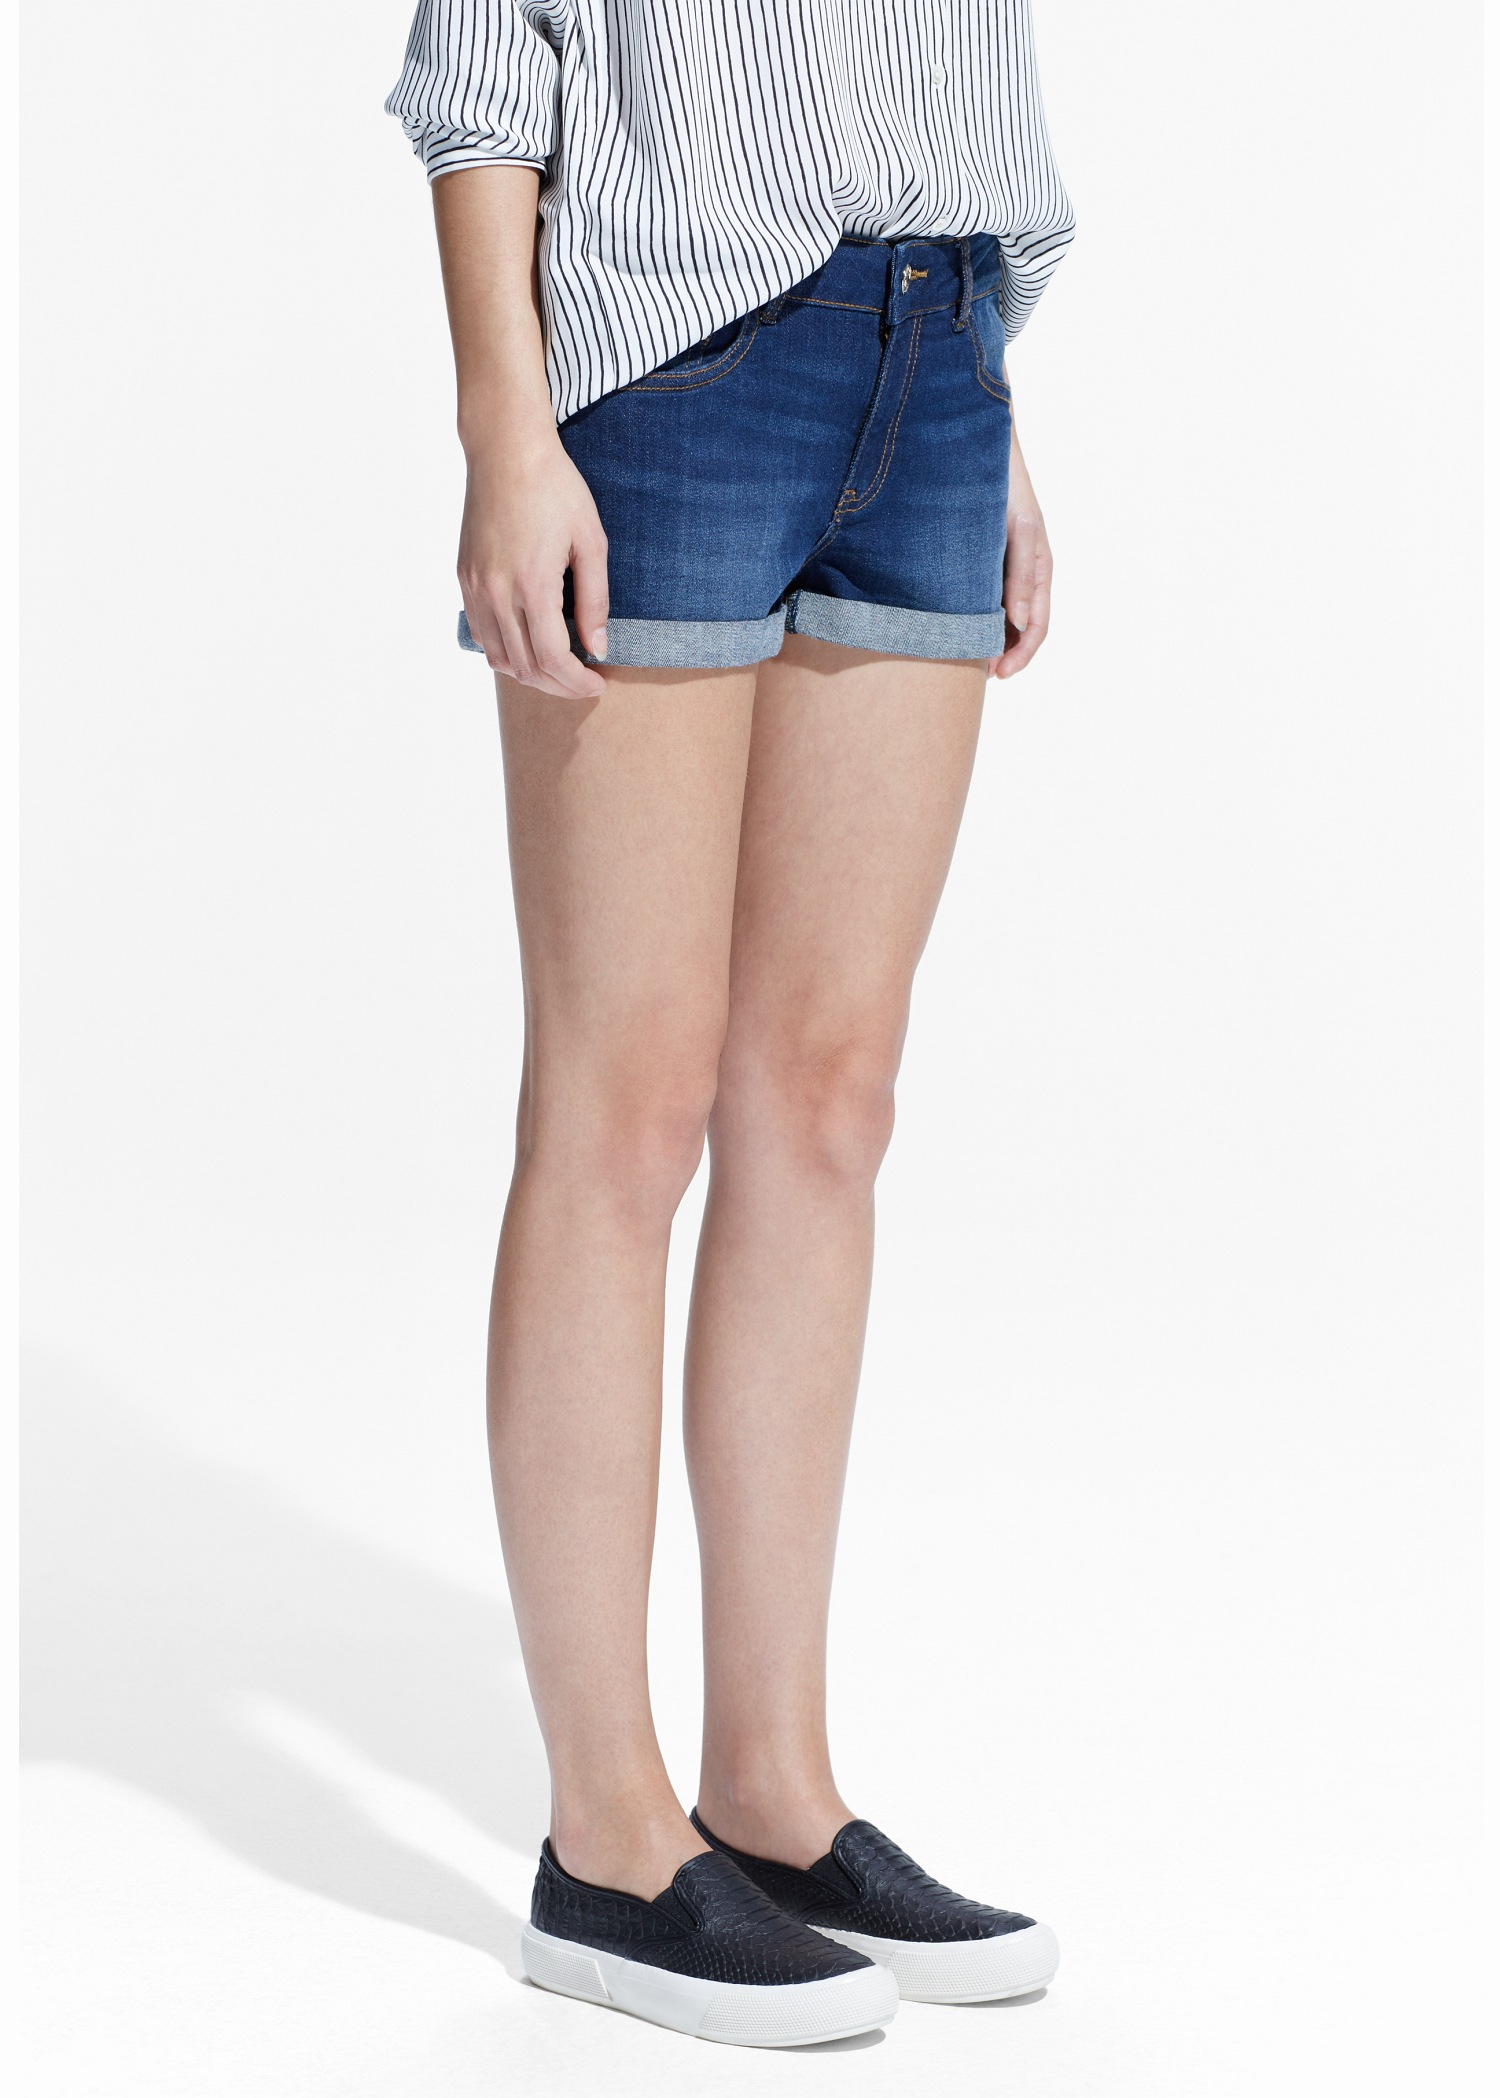 mango jean shorts